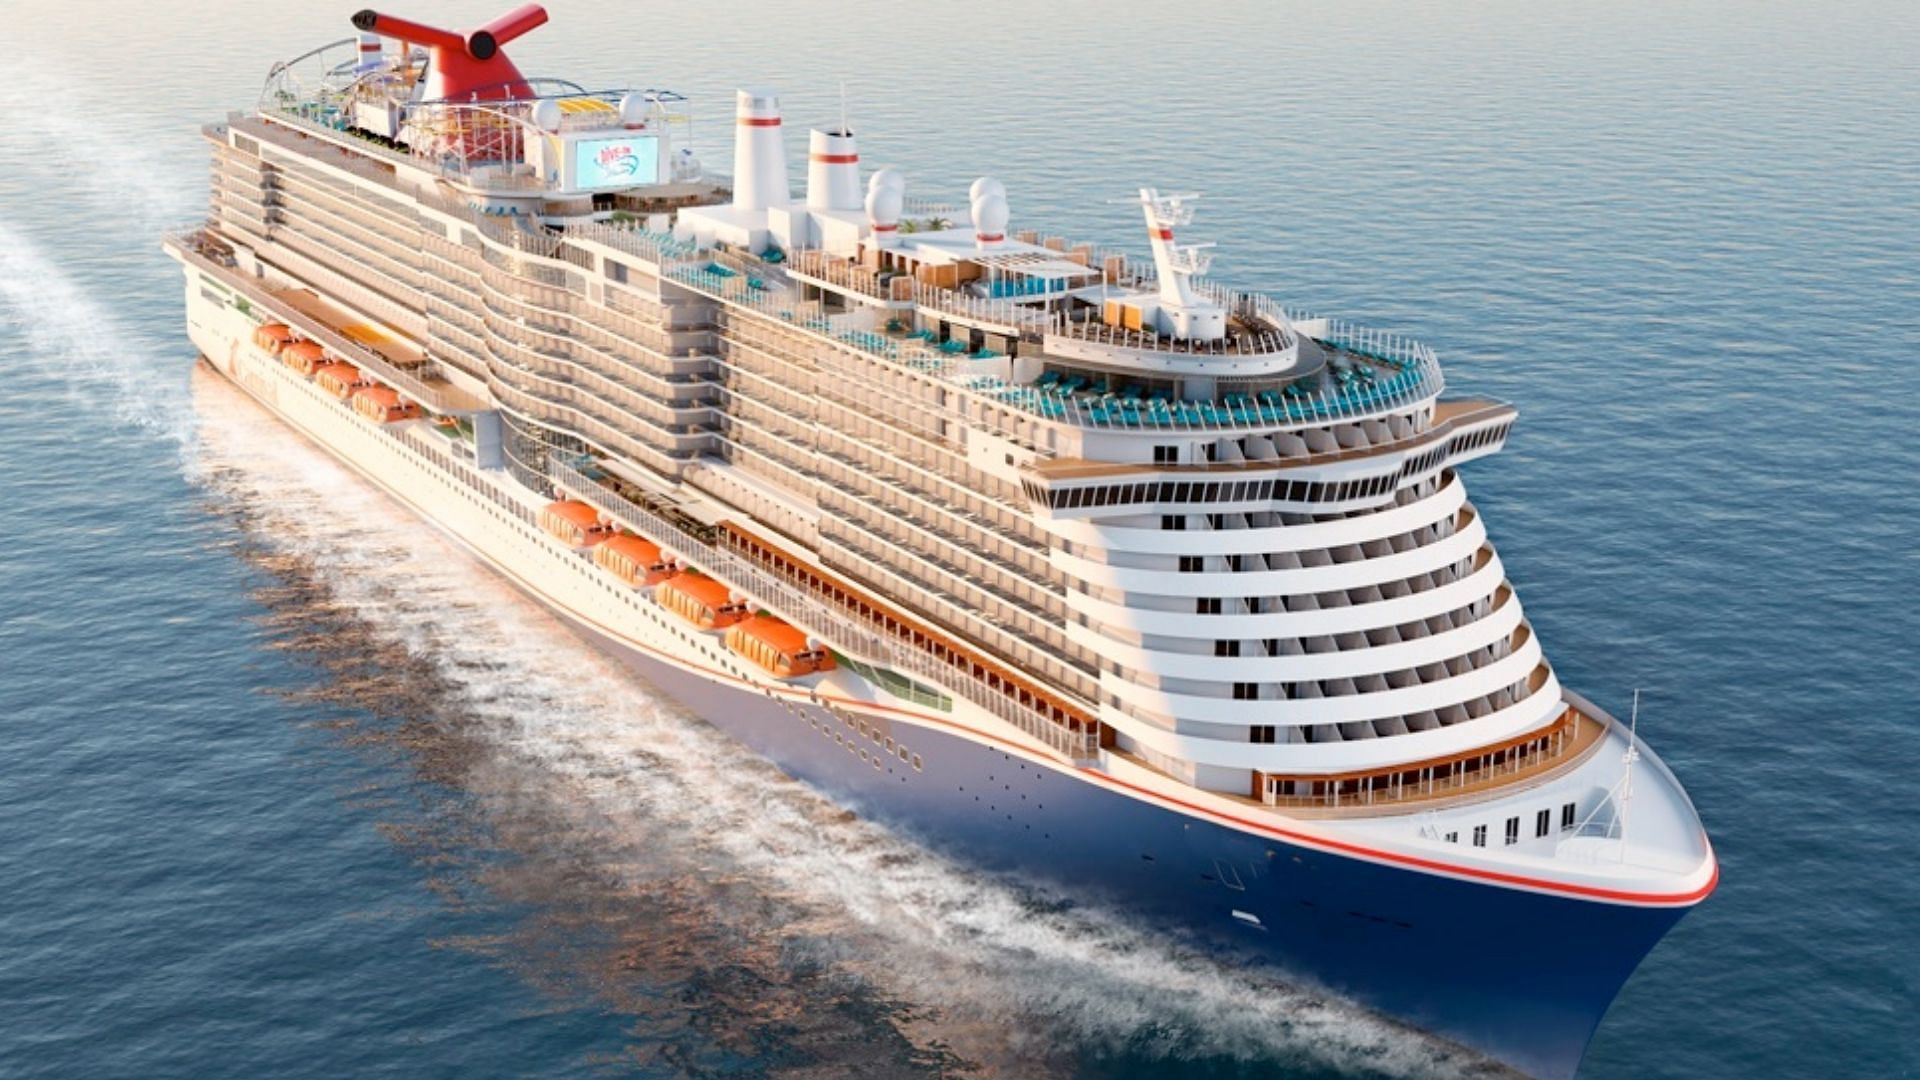 Cruise ships have become a popular tourist destination (Image via Getty/CarnivalCruiser)